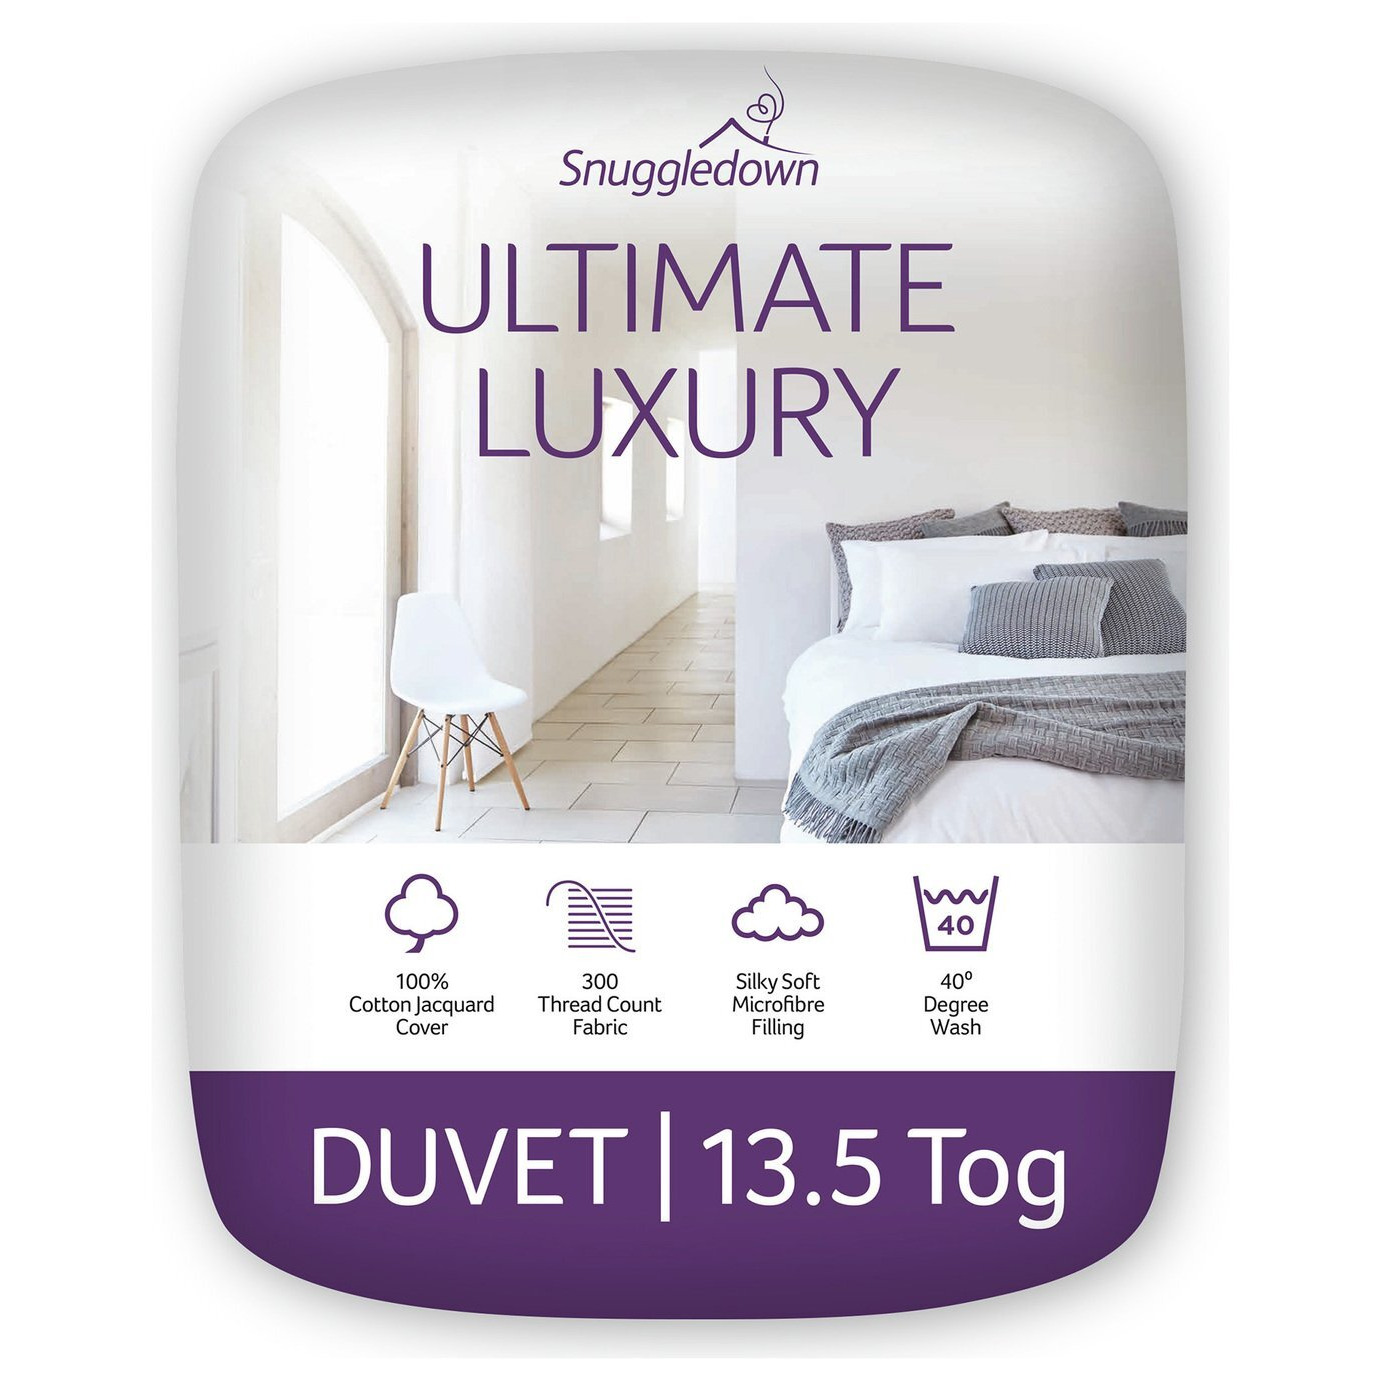 Snuggledown Retreat Ultimate Luxury 13.5 Tog Duvet -Kingsize - image 1